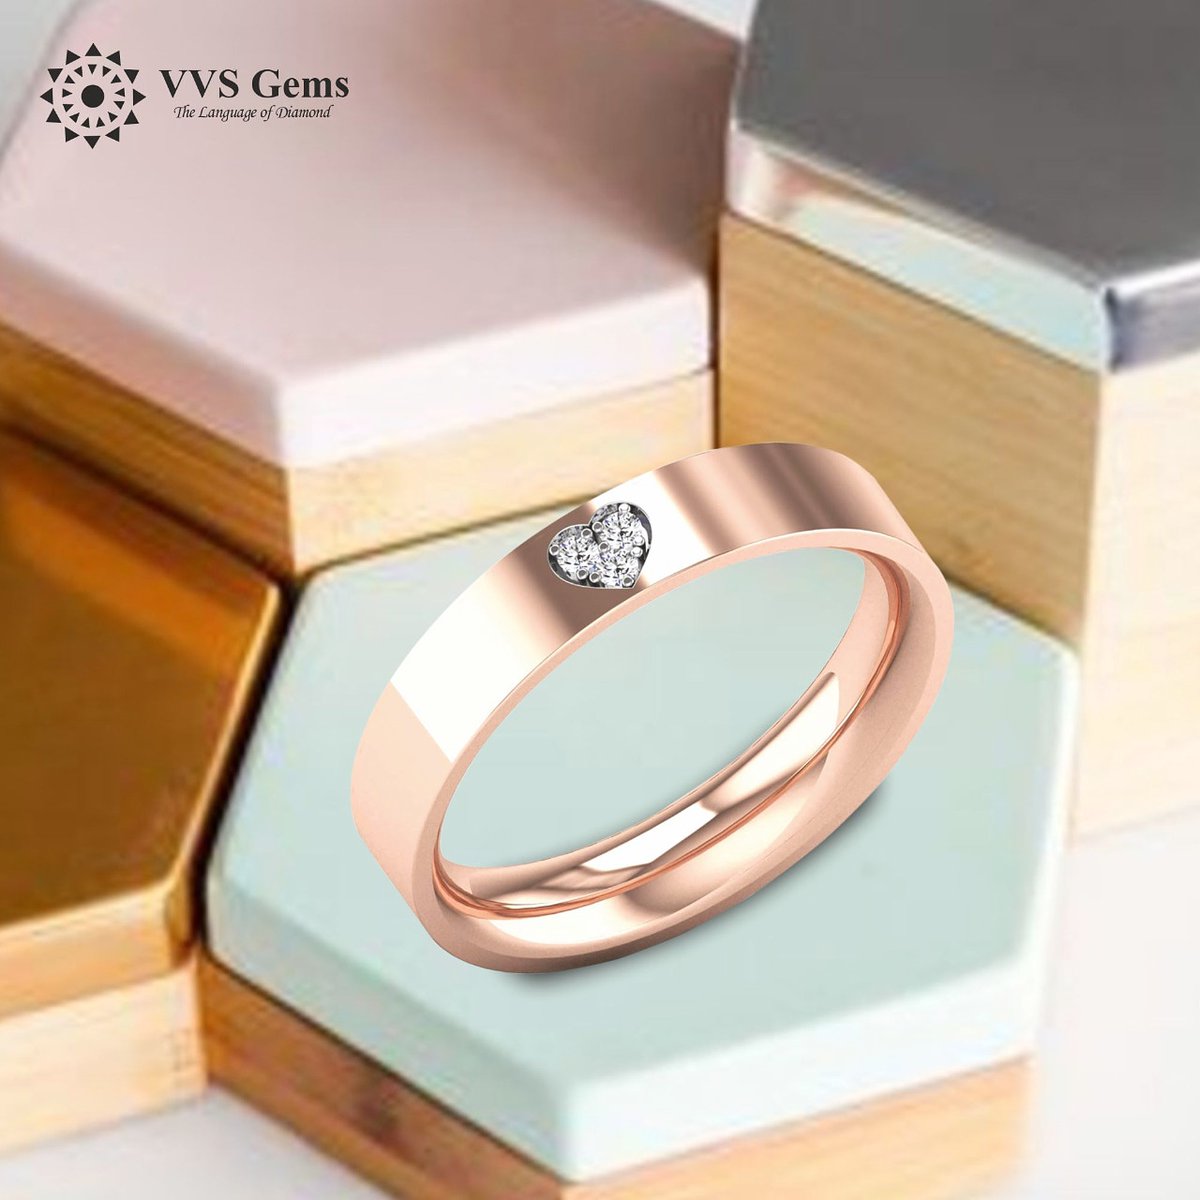 💖True Love Band Ring
.
.
.
.
.
.
#vvsgems1 #jewelry 
#icedout #goldchains #icetraythegang #cubanlink #miamicubanlink #diamondwatch #diamondgrillz #diamondchain
#diamondjewellary #realdiamonds #whitegold  #whitegoldjewelry #usaship #usa🇺🇸 #australia #australiajewellery
LJ1435